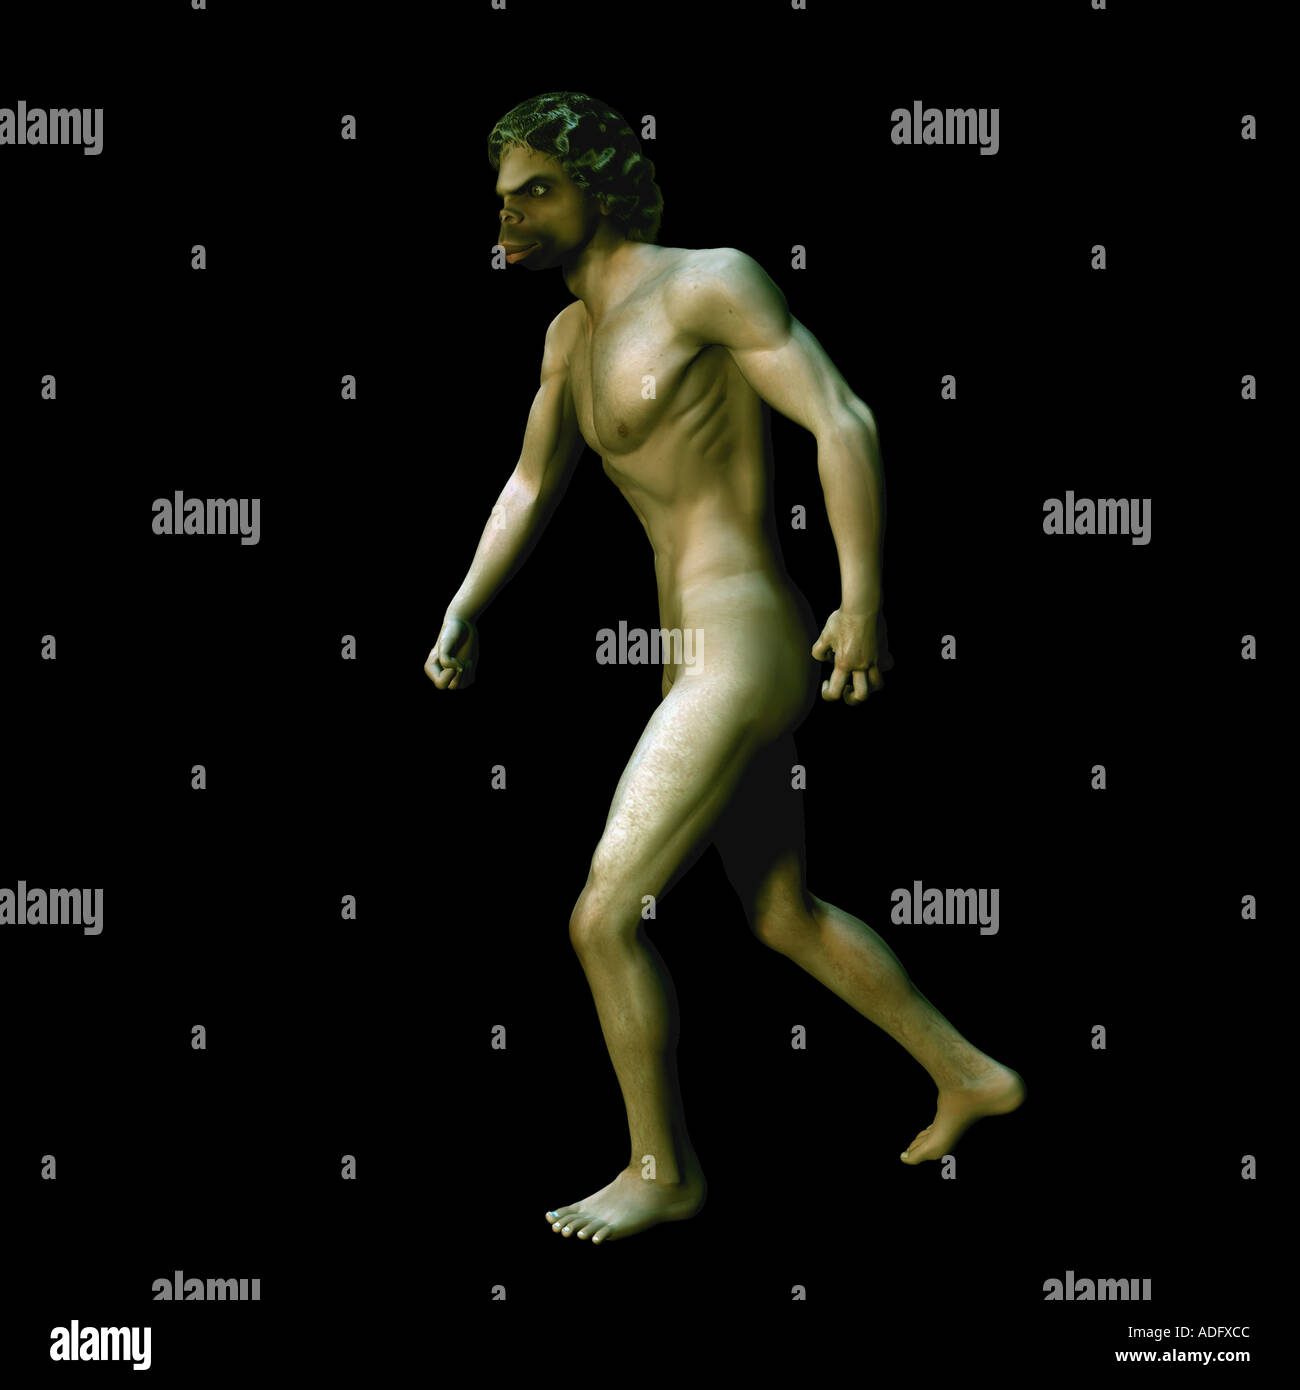 Grotta preistorica uomo rispetto degli esseri umani inizio homosapien Foto Stock